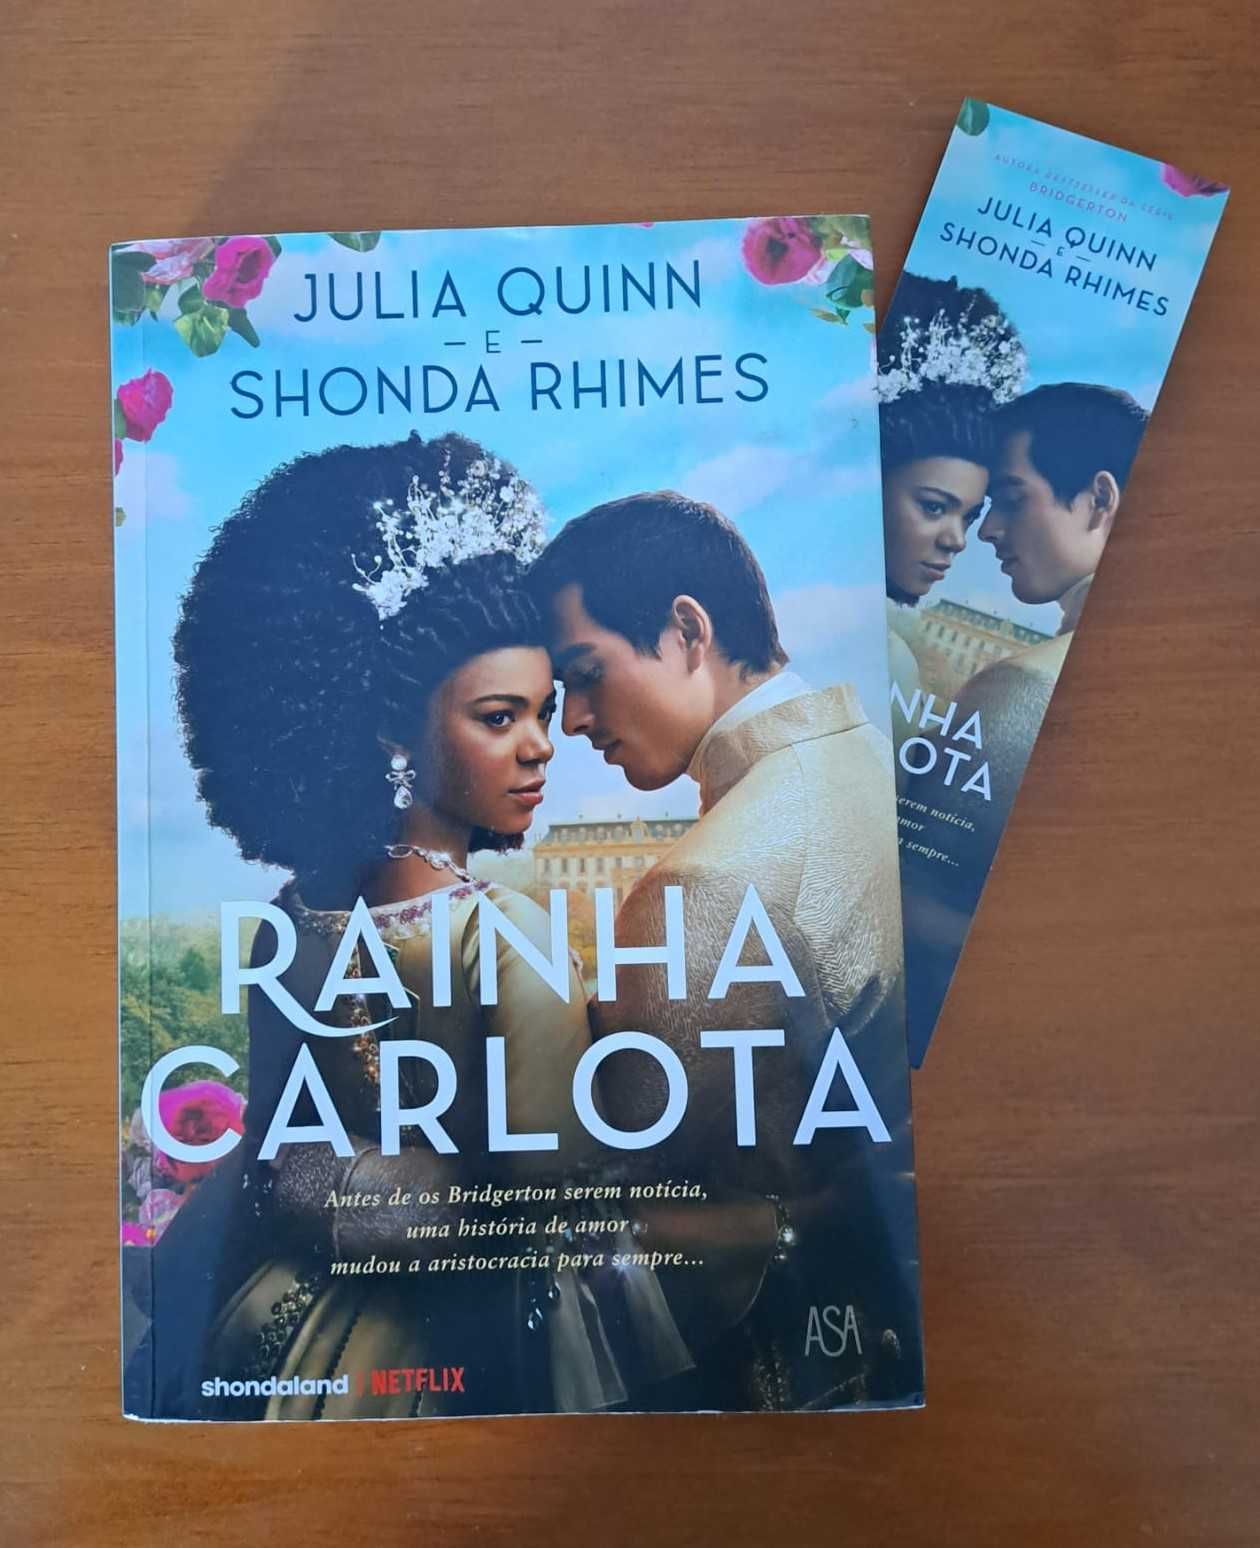 Livro "Rainha Carlota", de Julia Quinn e Shonda Rhimes